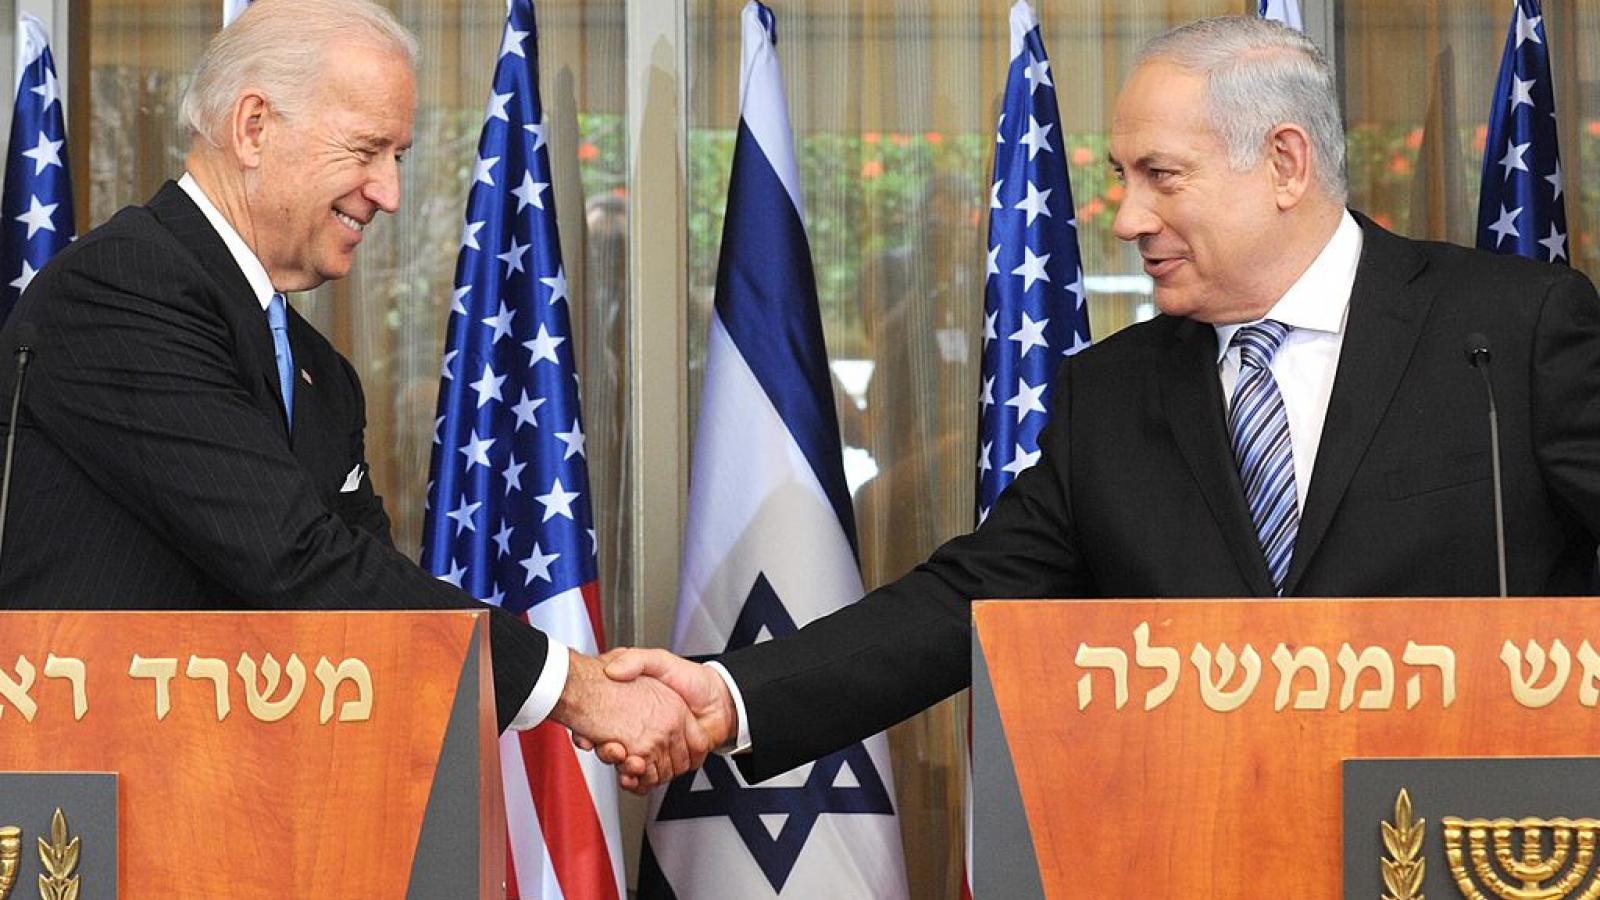 Biden spoke with Israeli Prime Minister Netanyahu for the first time